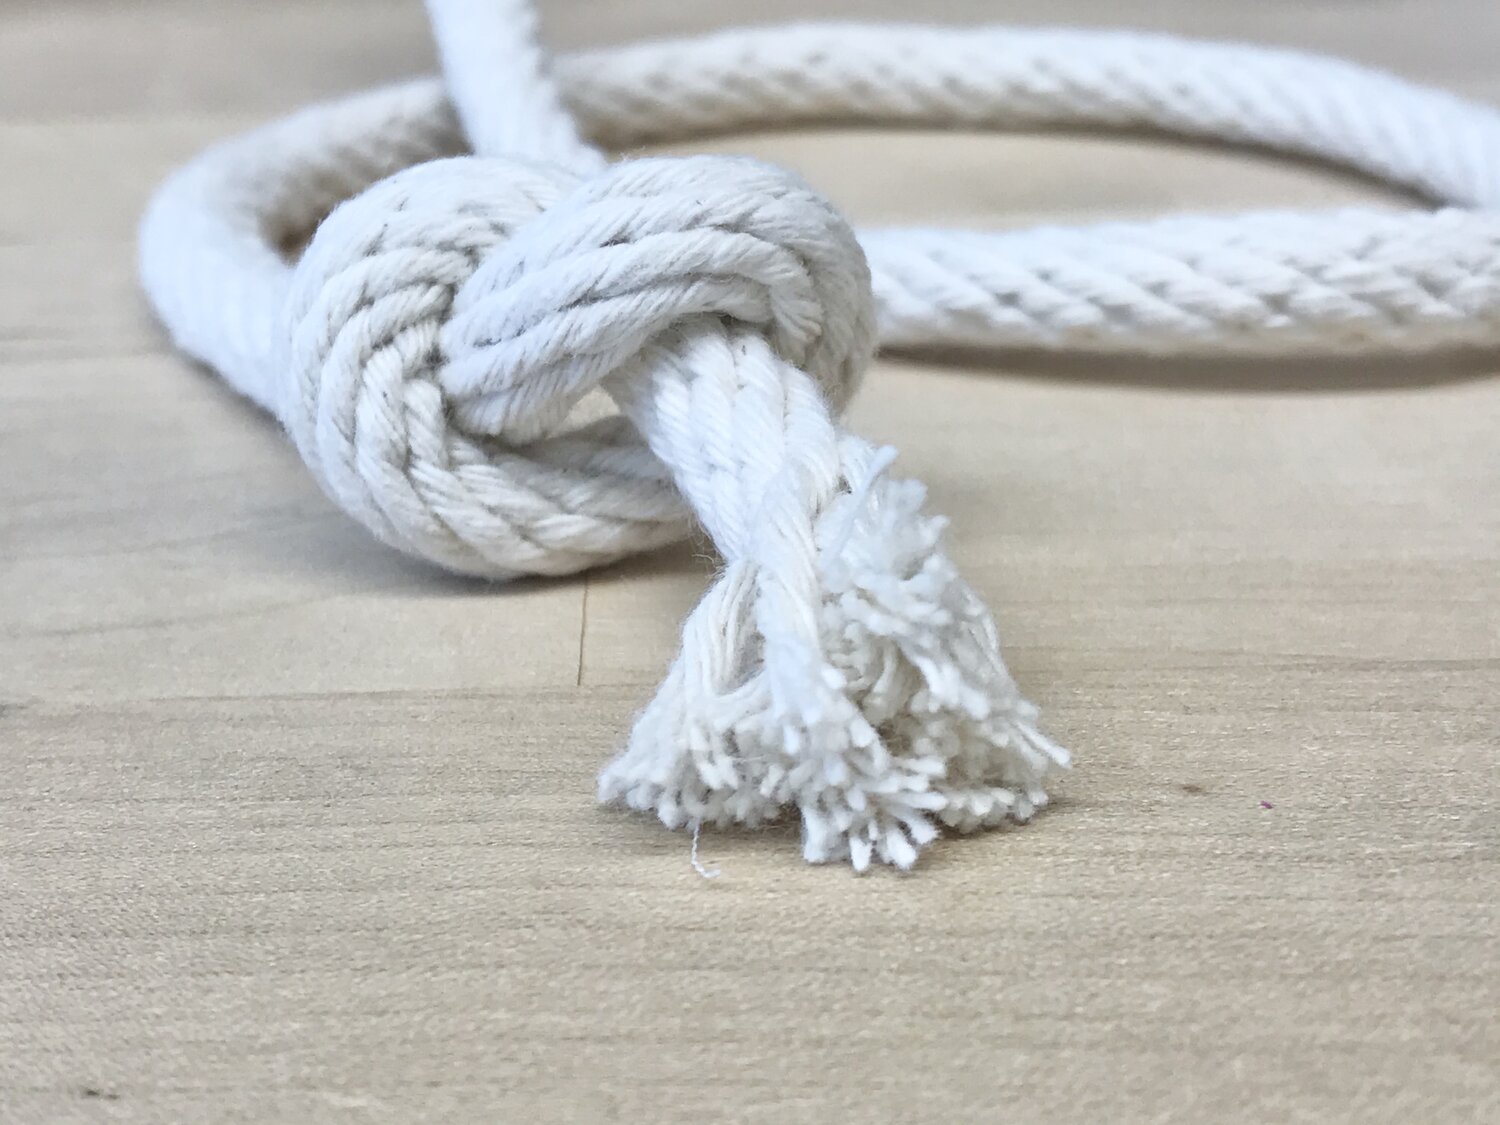 Mini 5/16 Spoolette - 100% Cotton Rope Spool - Made in America - 5/16  Solid Braid Rope - 125 ft mini spool — The Mountain Thread Company (TM)